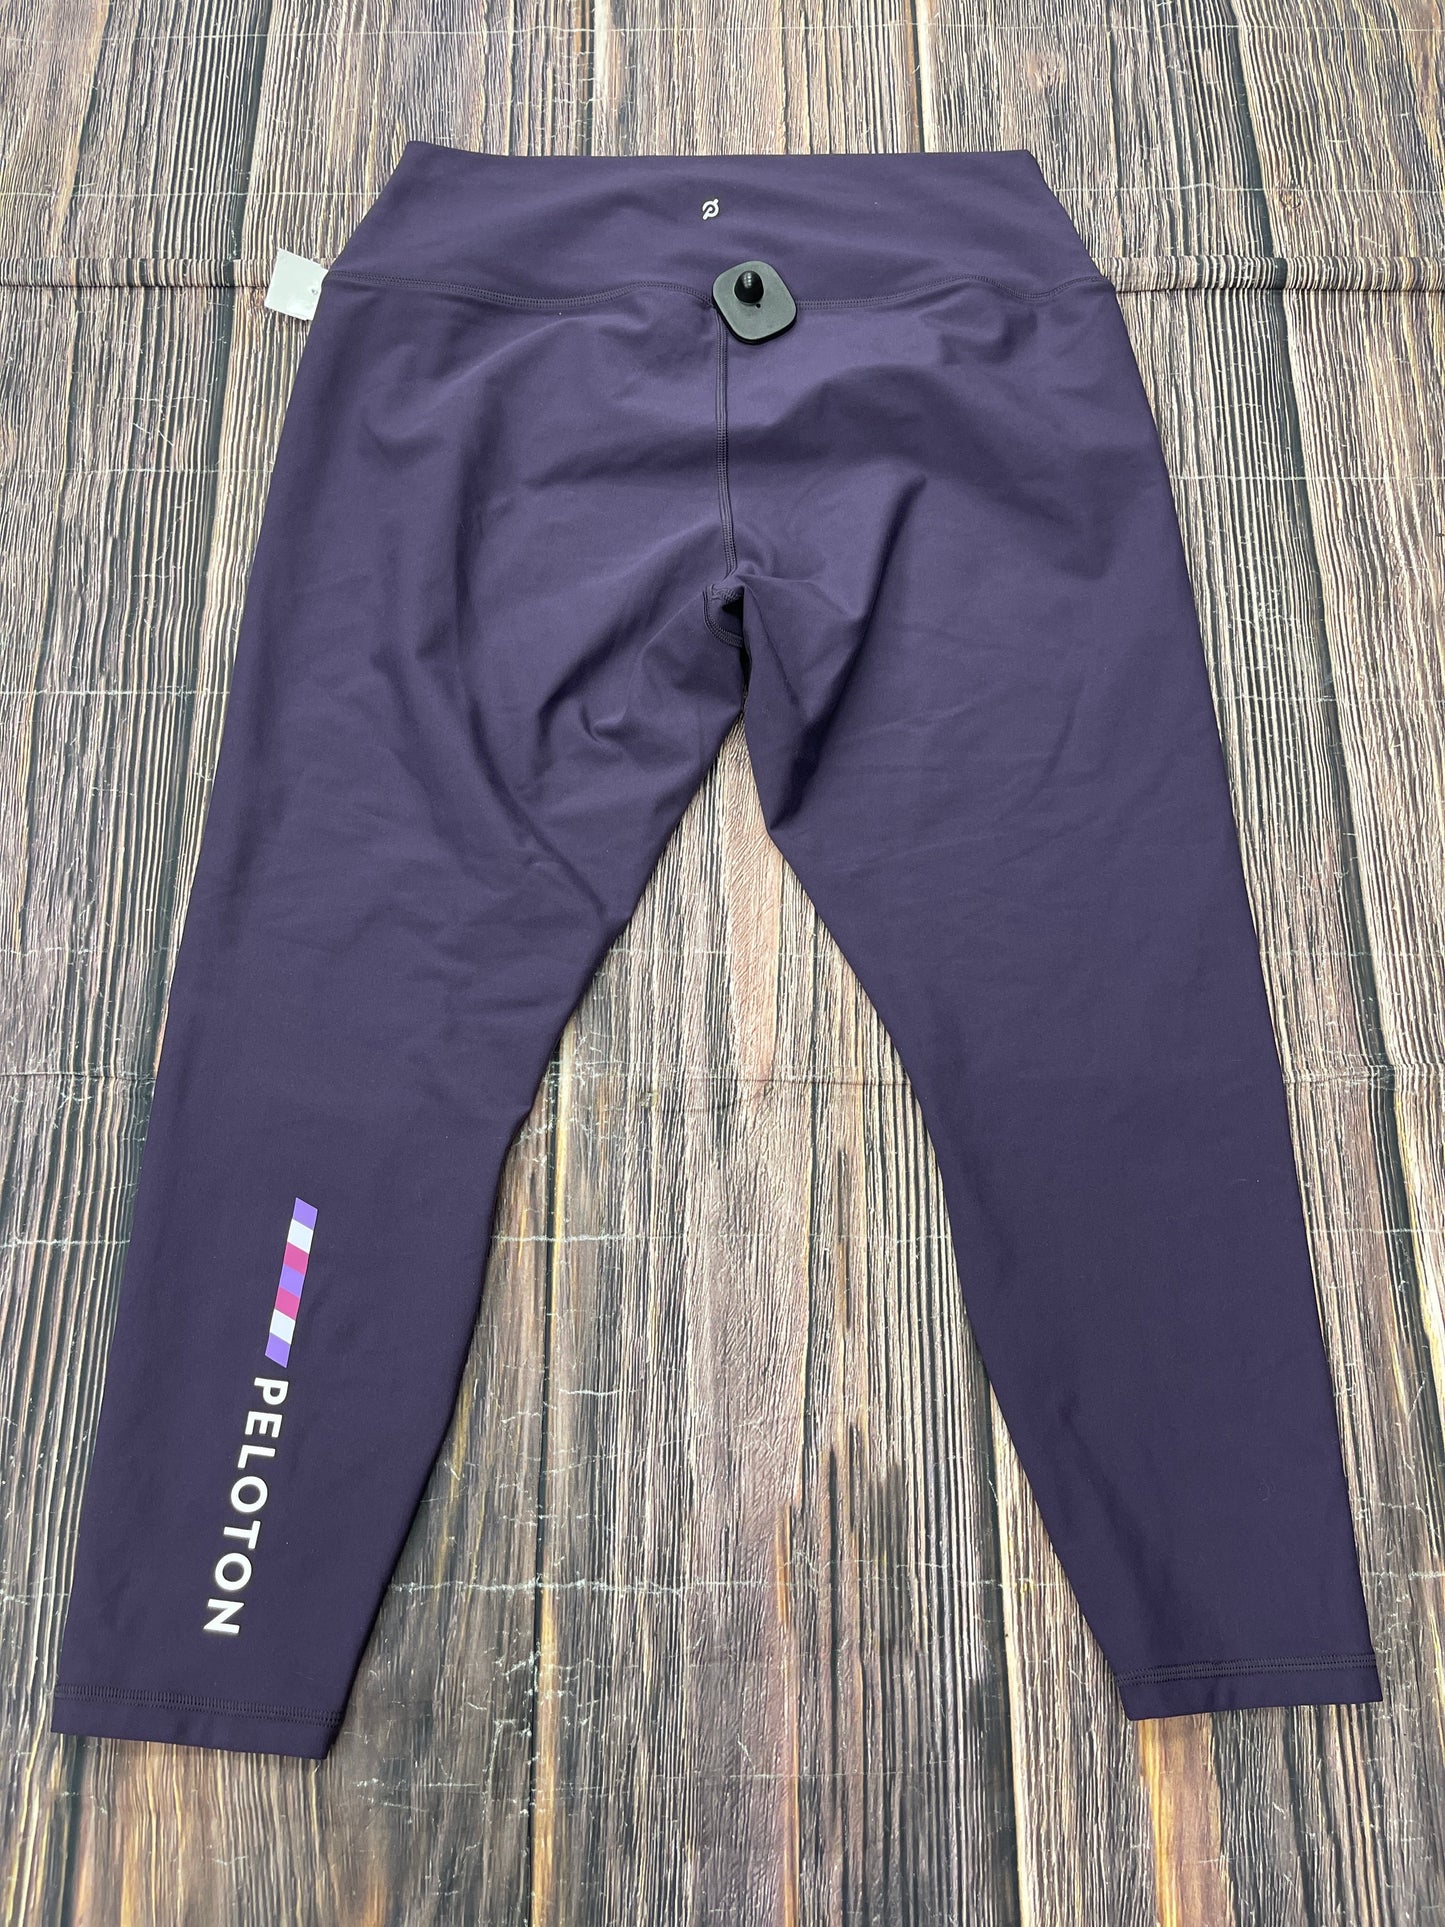 Purple Athletic Leggings Clothes Mentor, Size 1x